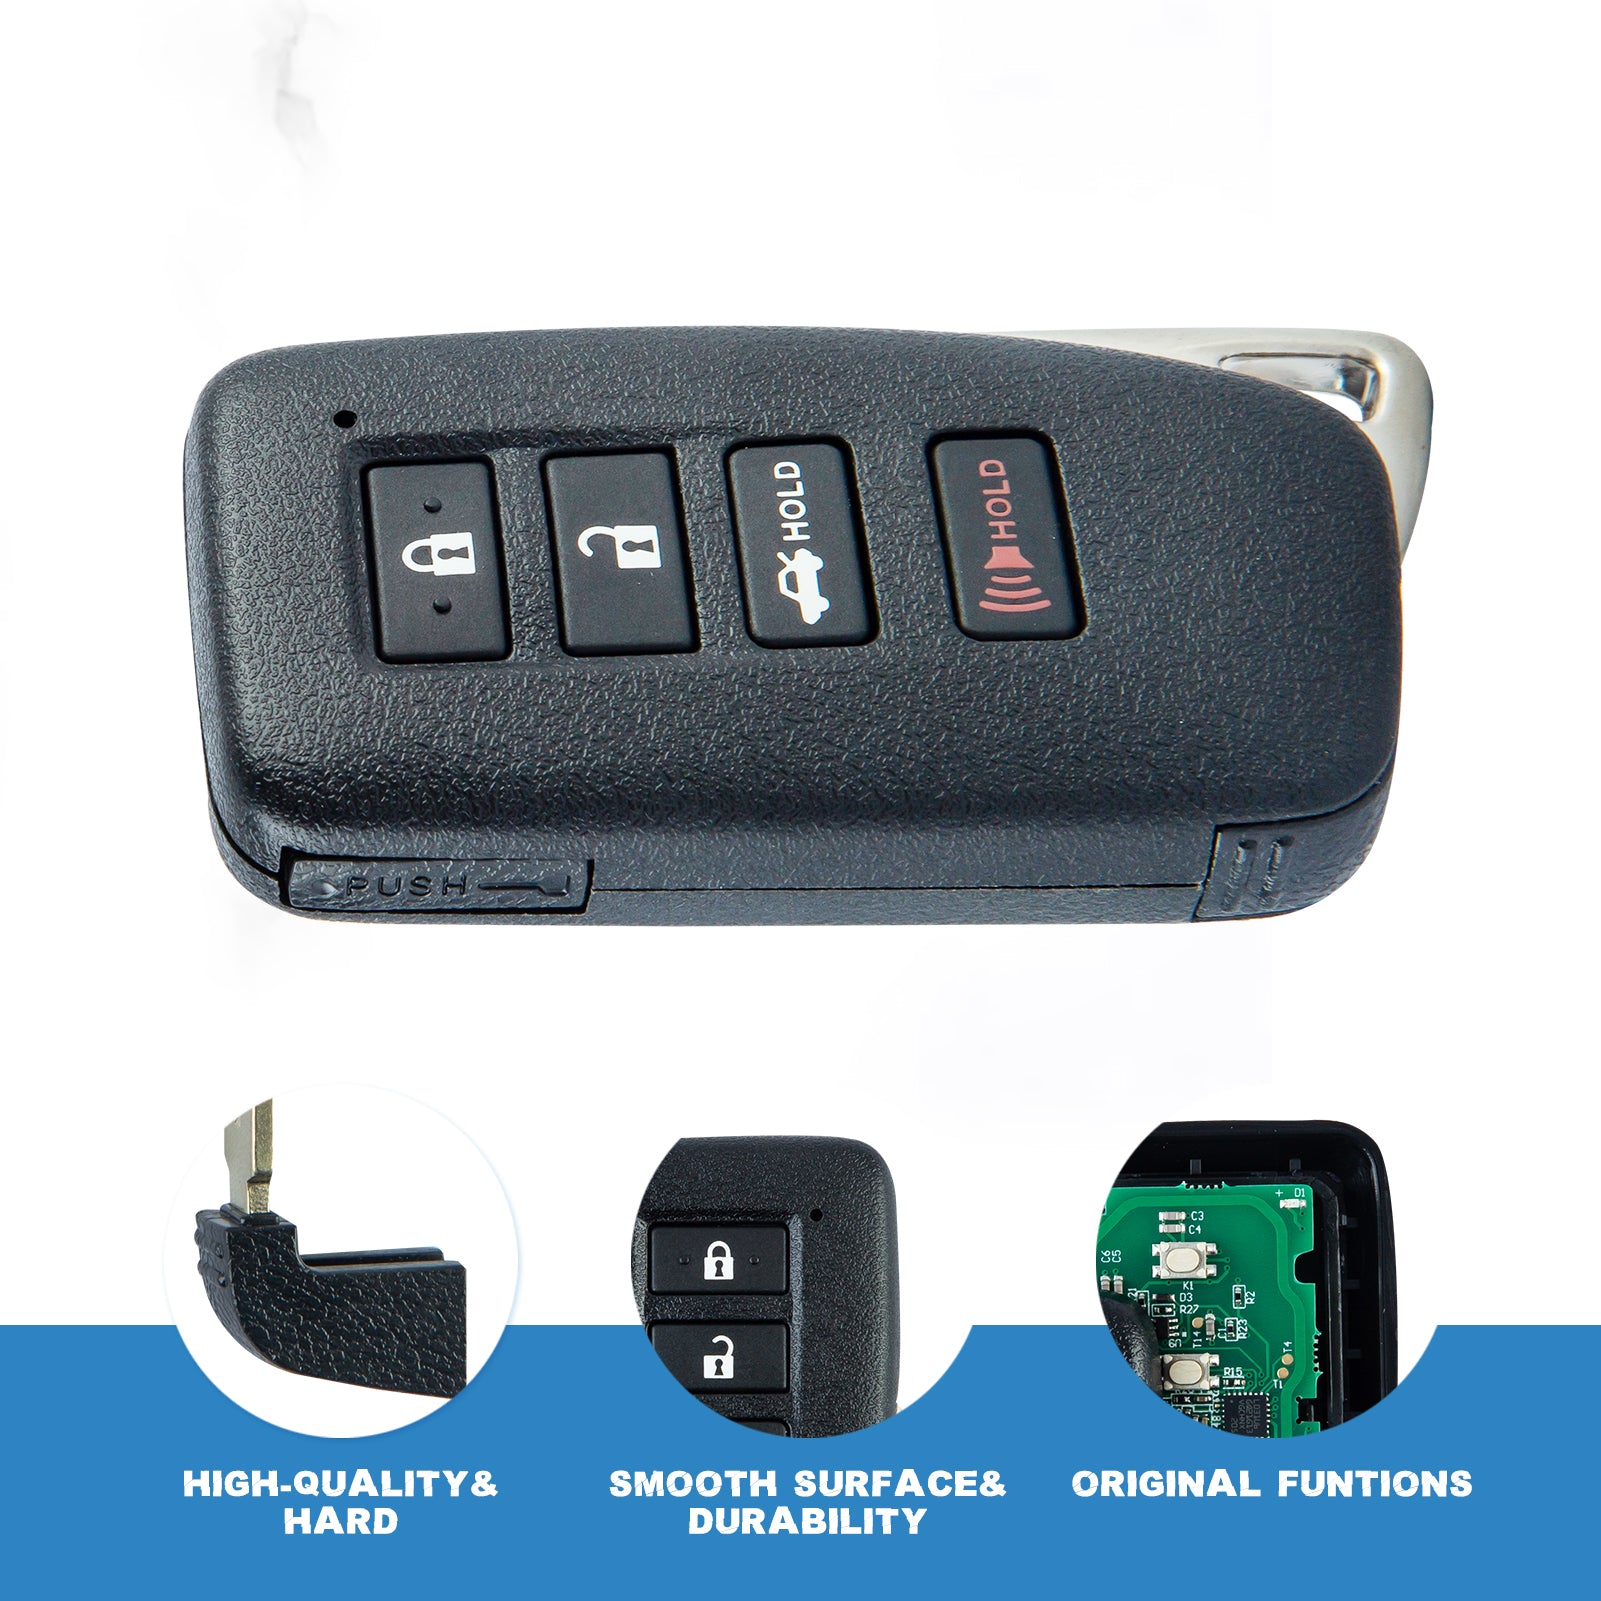 Keyless Entry Remote for 2013-2018 ES350 GS350 4 BTN Smart Key fob with FCC ID: HYQ14FBA 281451-0020